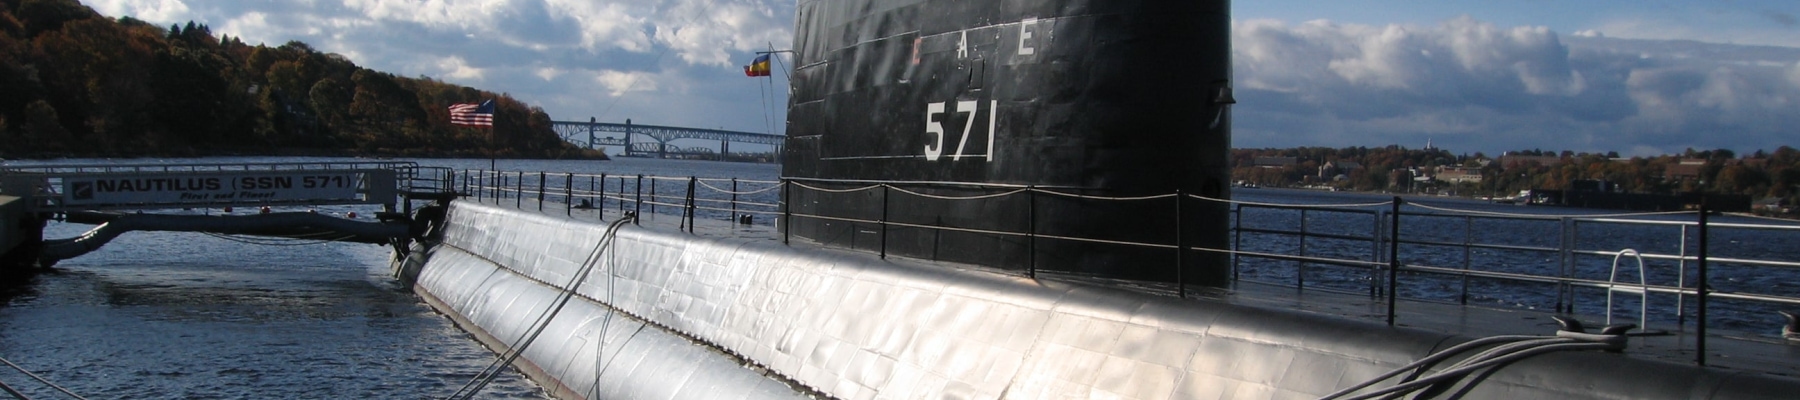 USS_Nautilus_SSN571.jpeg